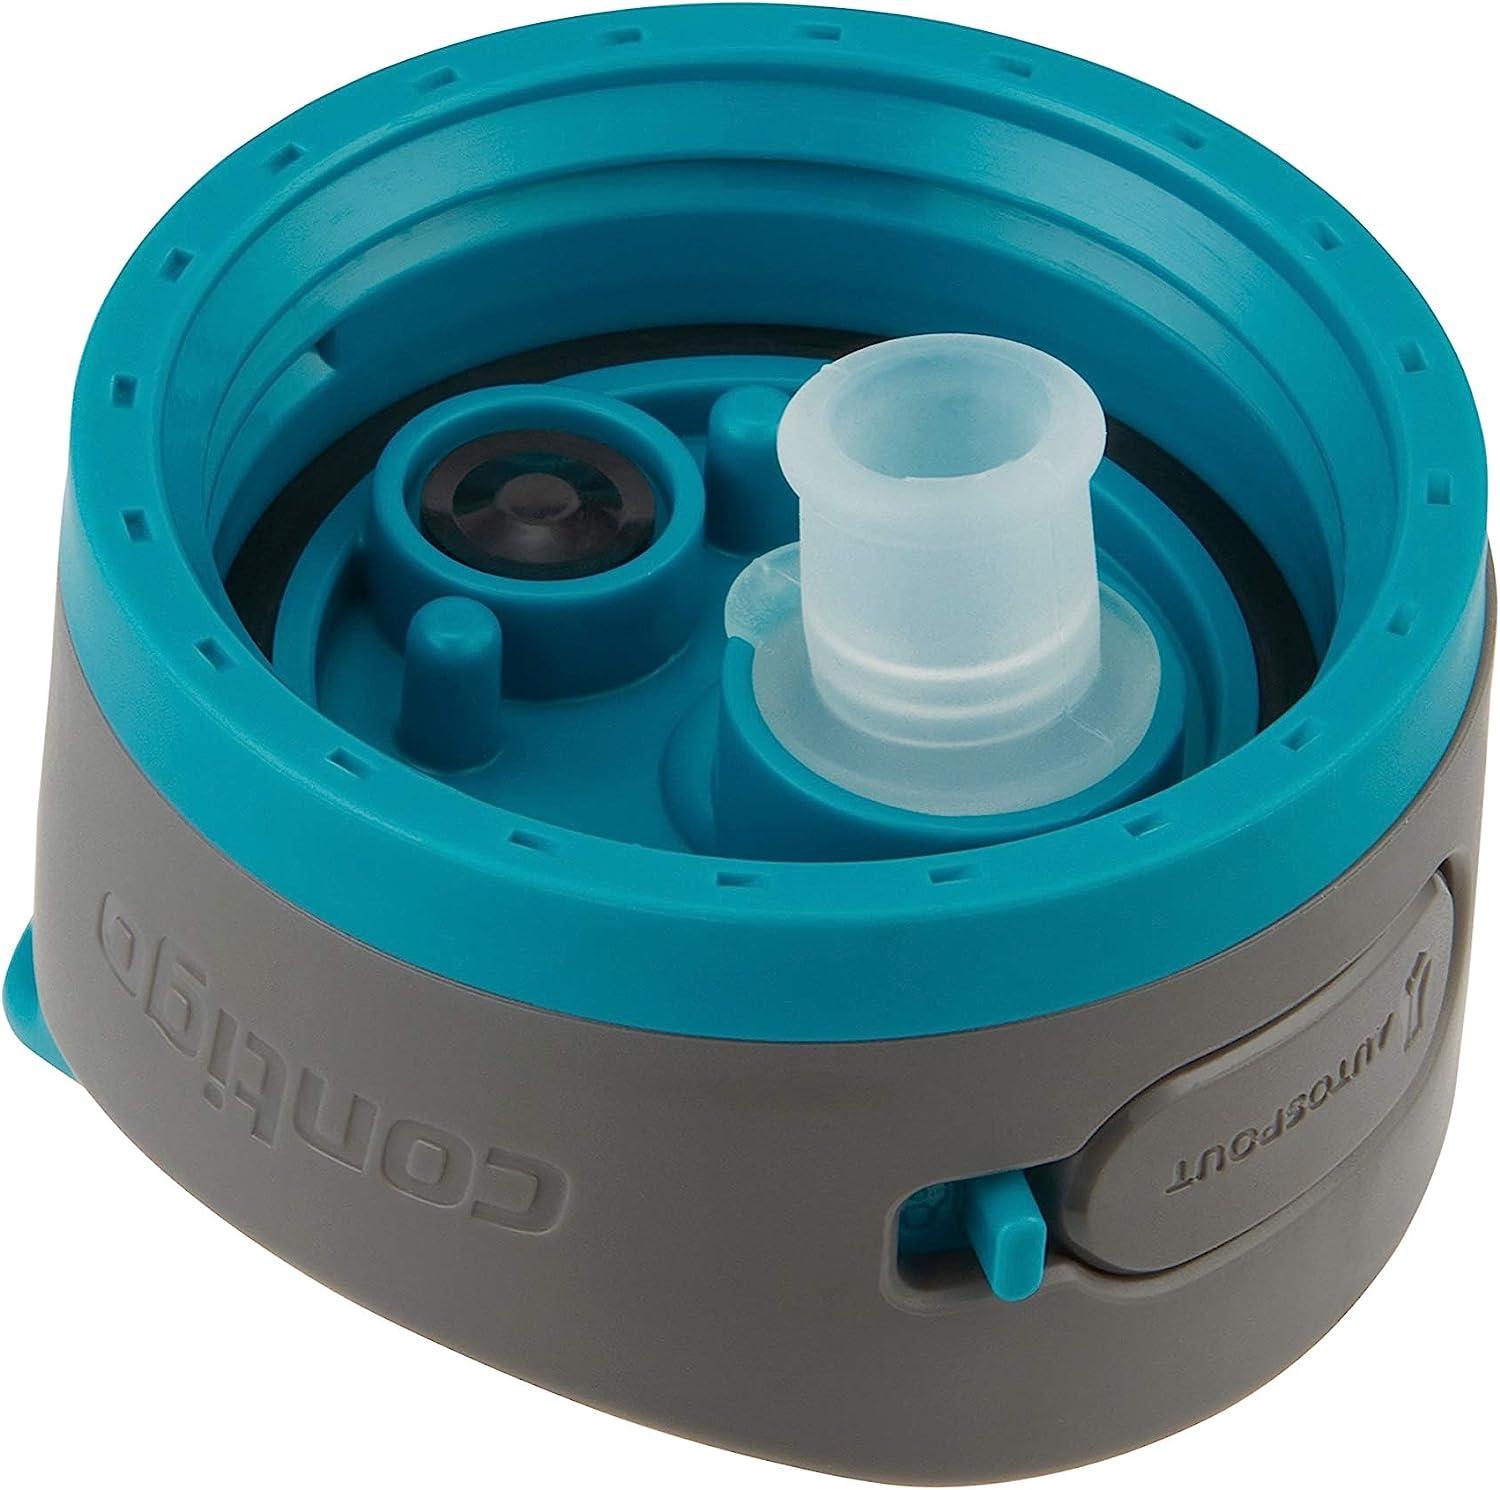 Contigo Ashland 2.0 leak proof water bottle with lid lock and angled s –  jeffrybaba